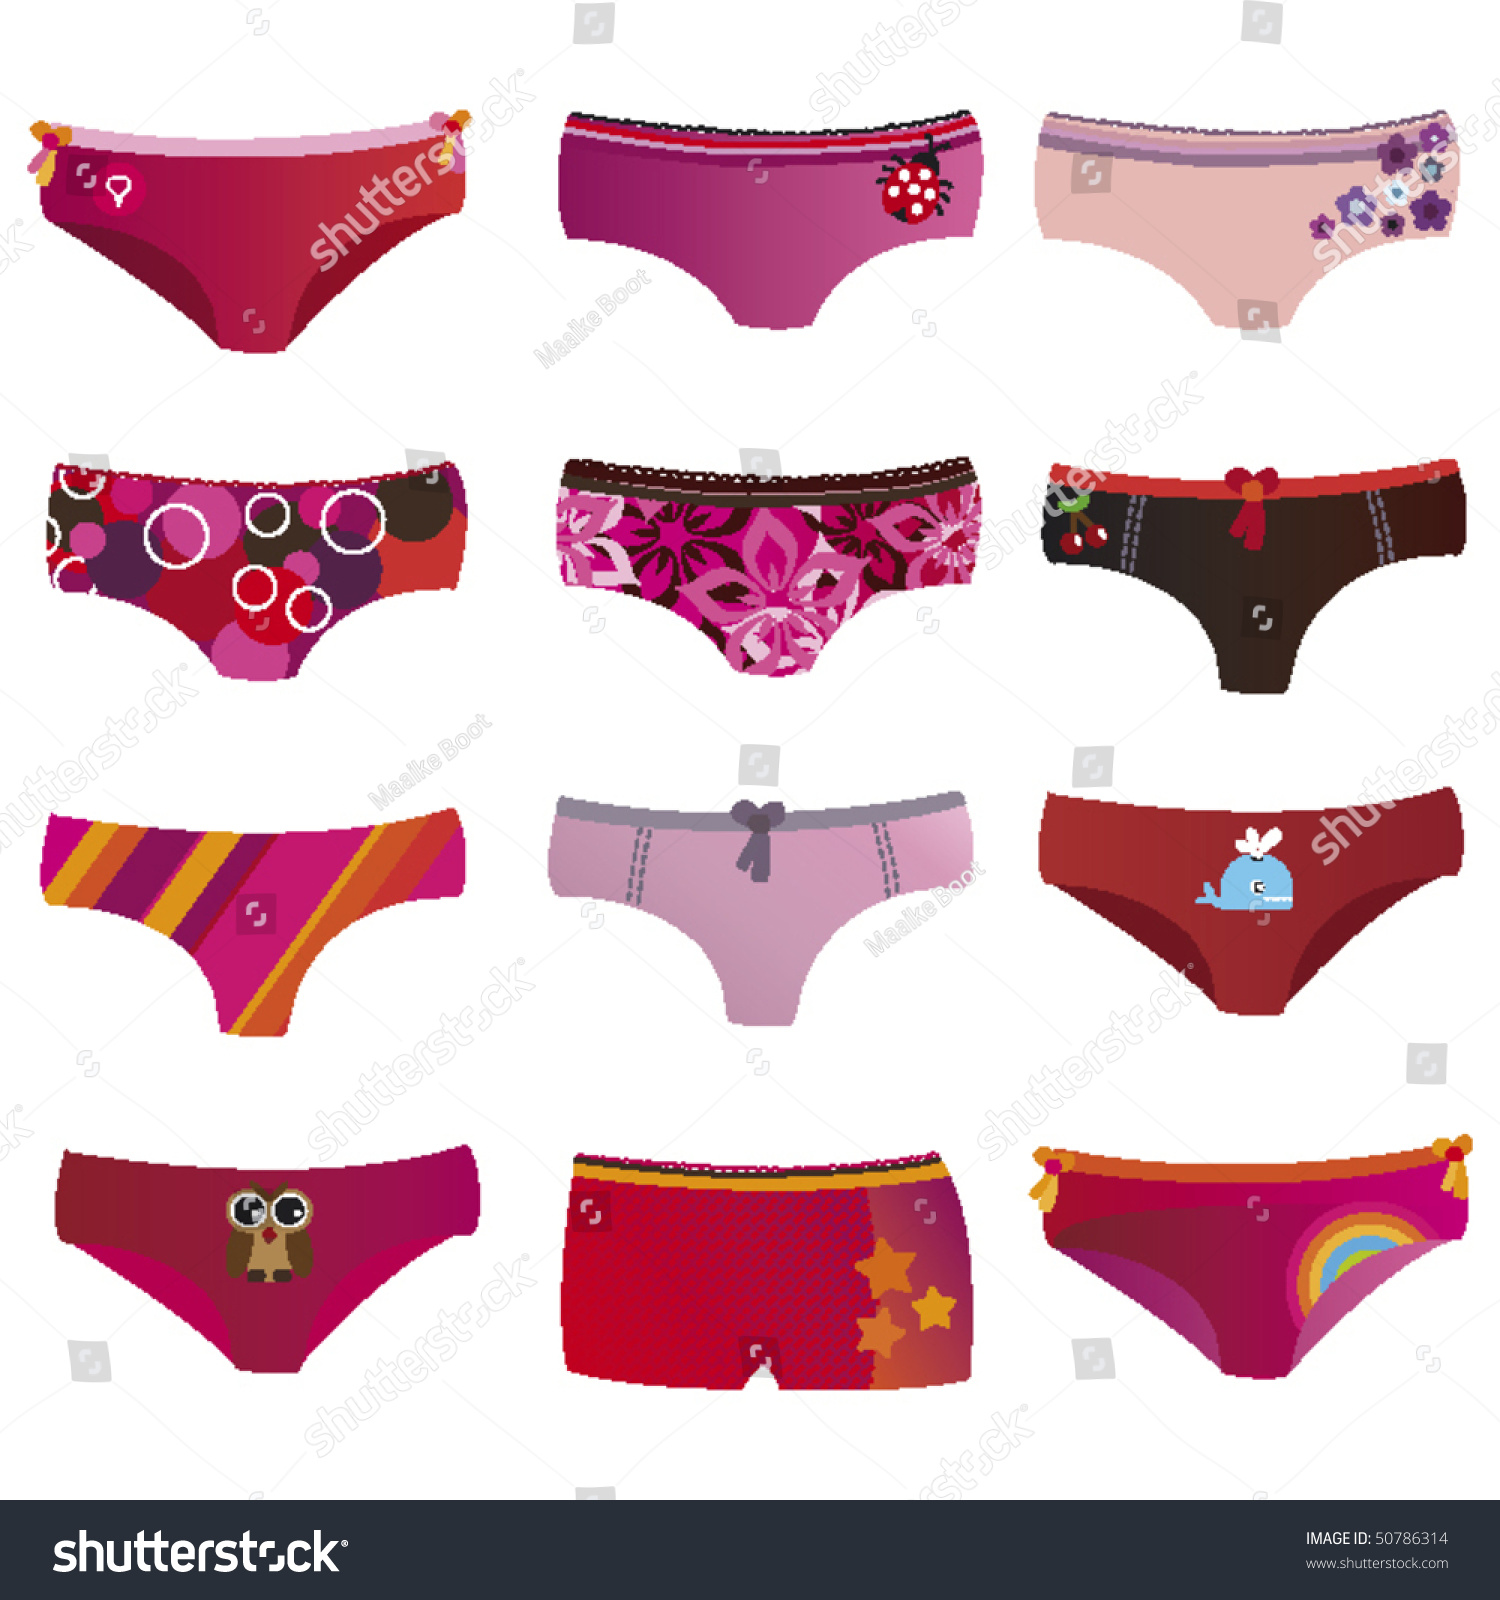 38 Sexy Teen Girl Bikini Stock Illustrations Images And Vectors Shutterstock